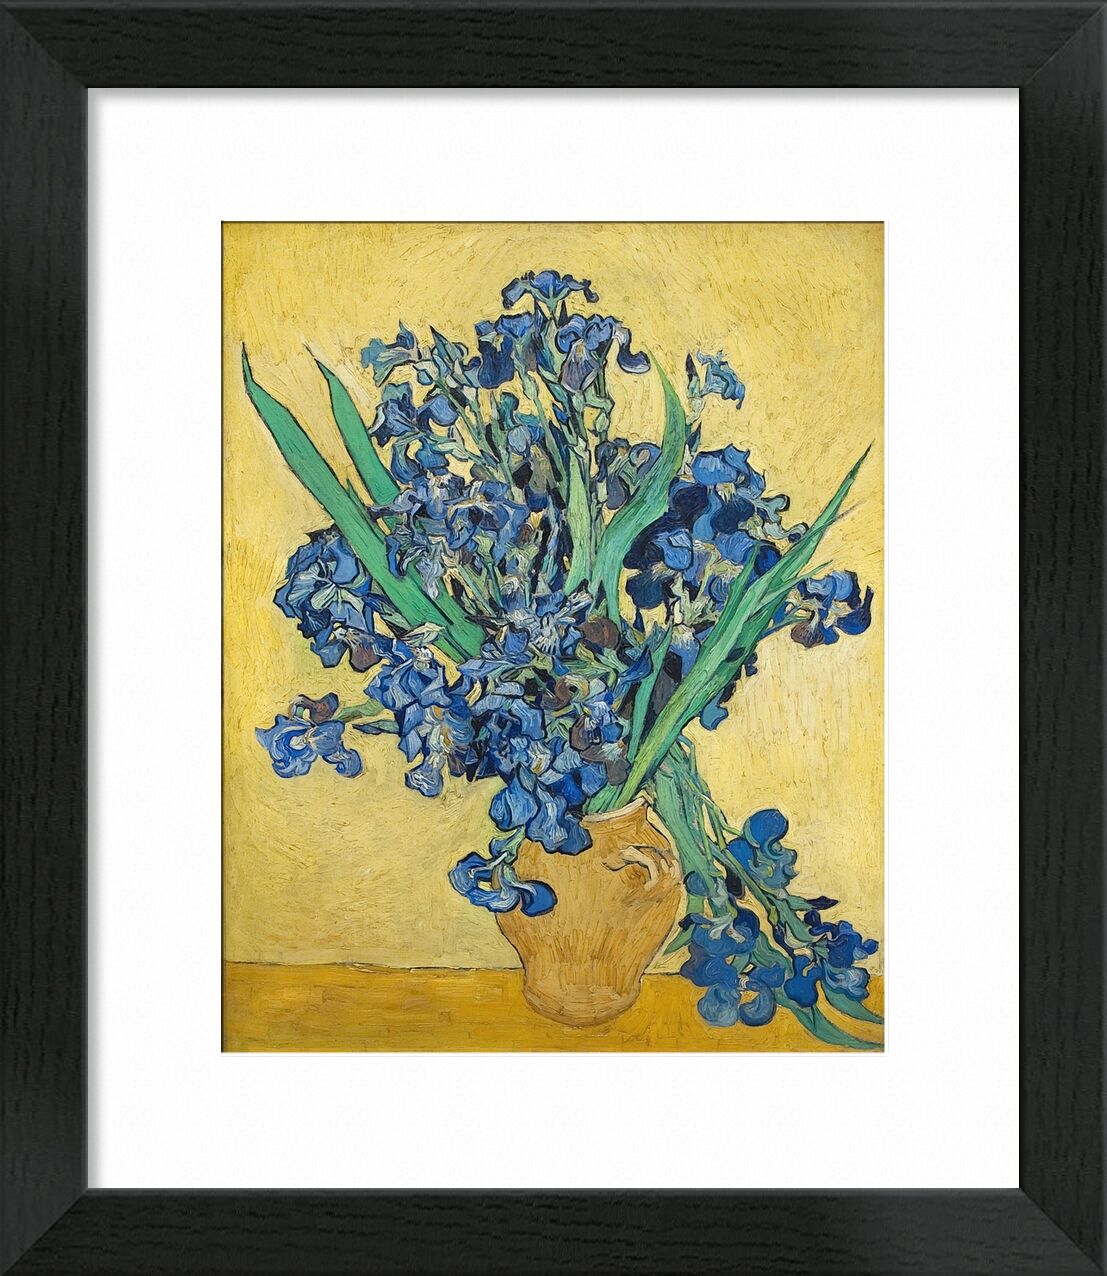 Vase of Irises Against a Yellow Background - Van Gogh von Bildende Kunst, Prodi Art, Van gogh, Malerei, Iris, Vase, blau, gelb